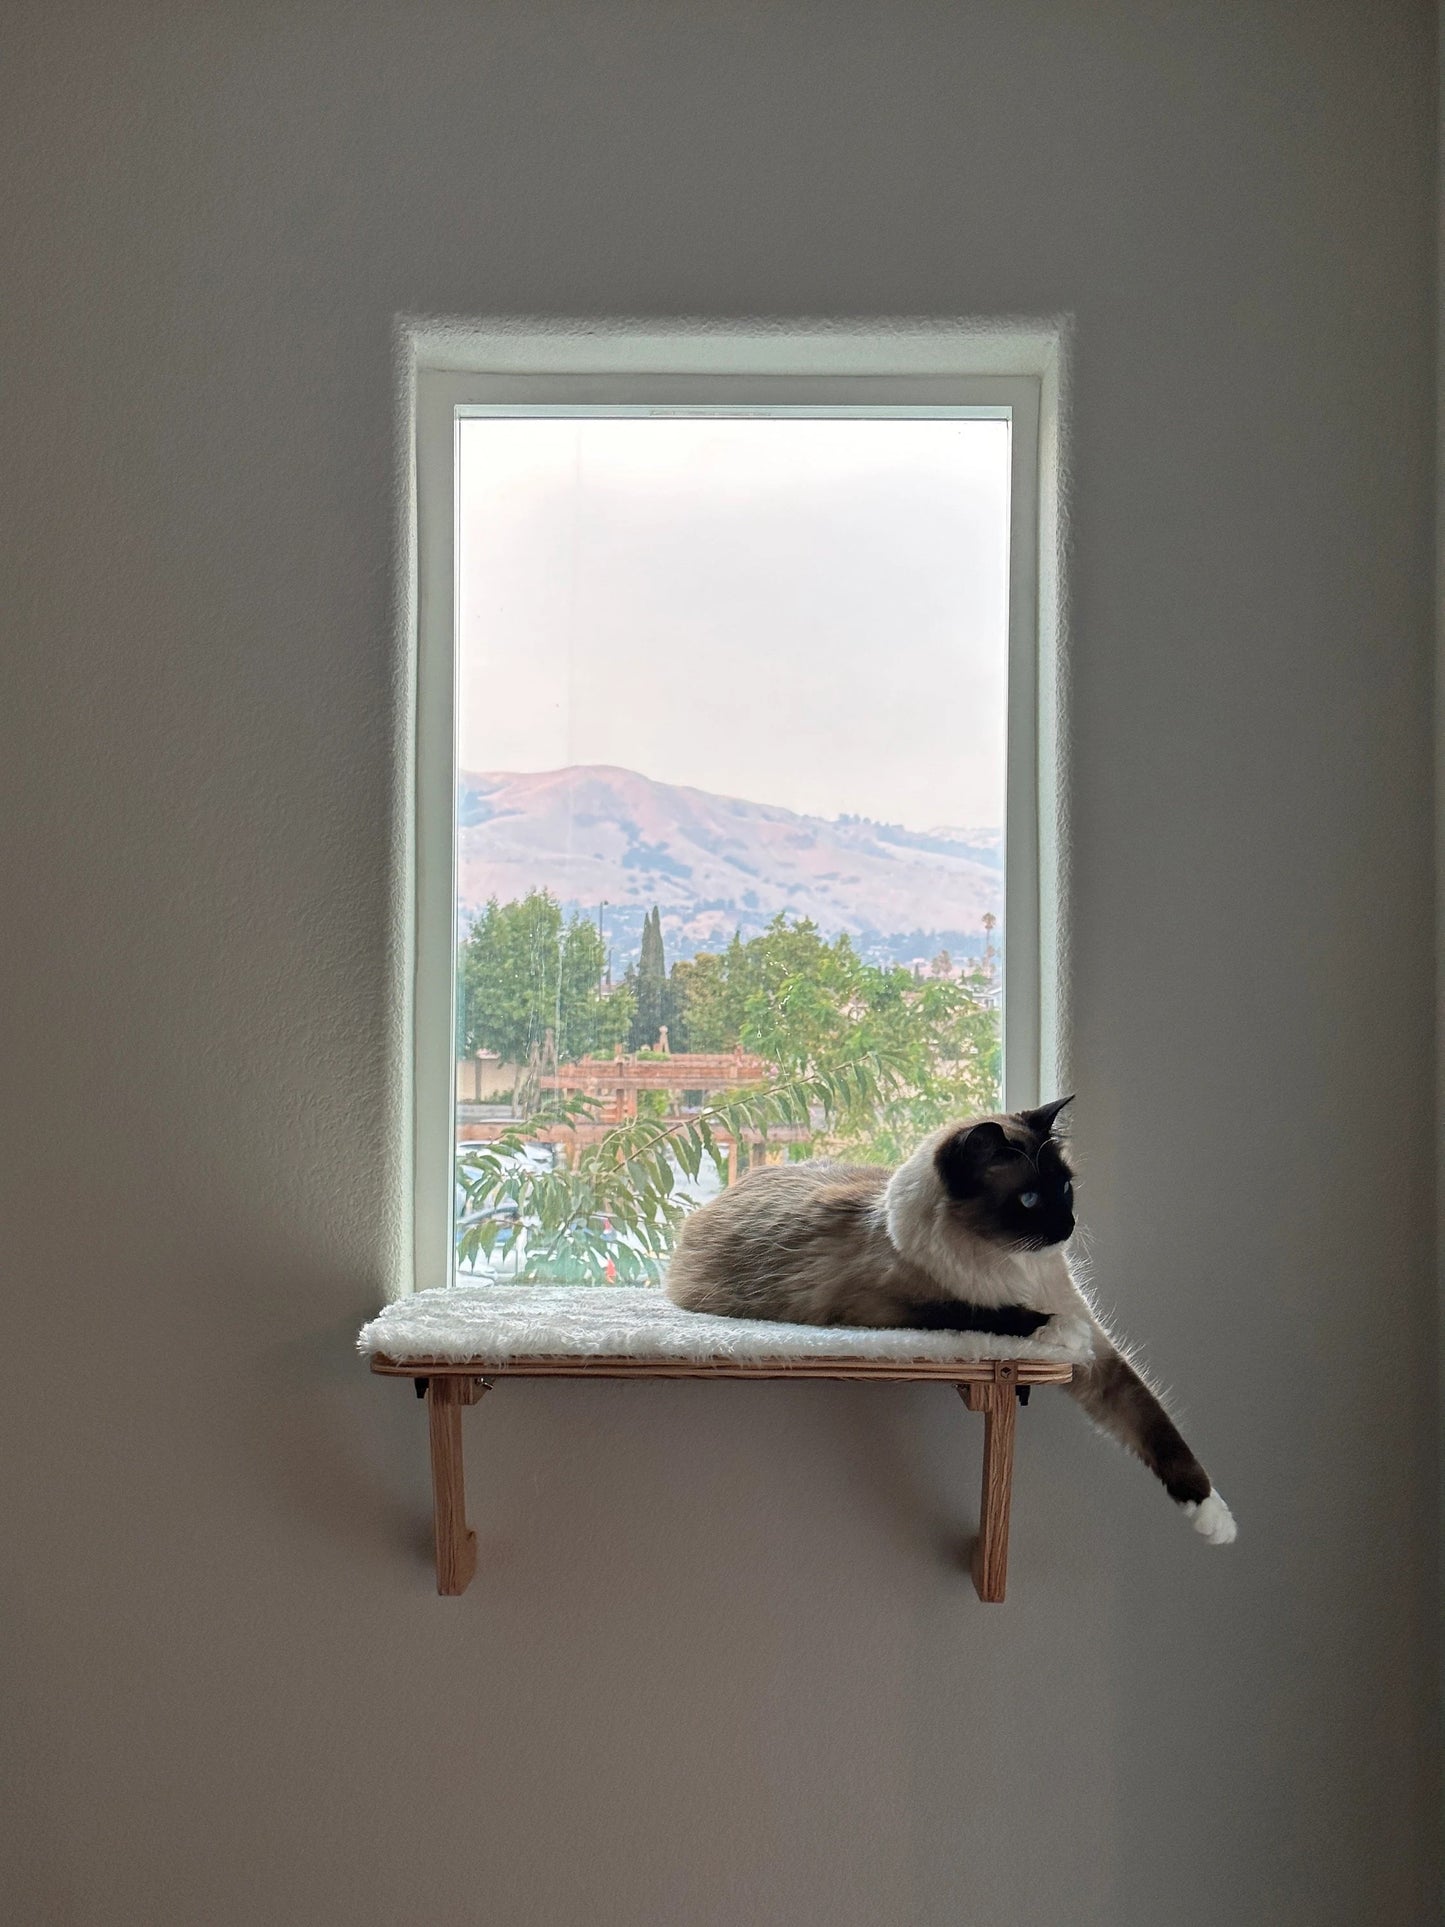 THENAMU 7, 22” x 10.5” Non-slip, Cat Window Perch, Cat Window Shelf, Cat Window Seat, Installed-removed 1 minute, No tools No nails